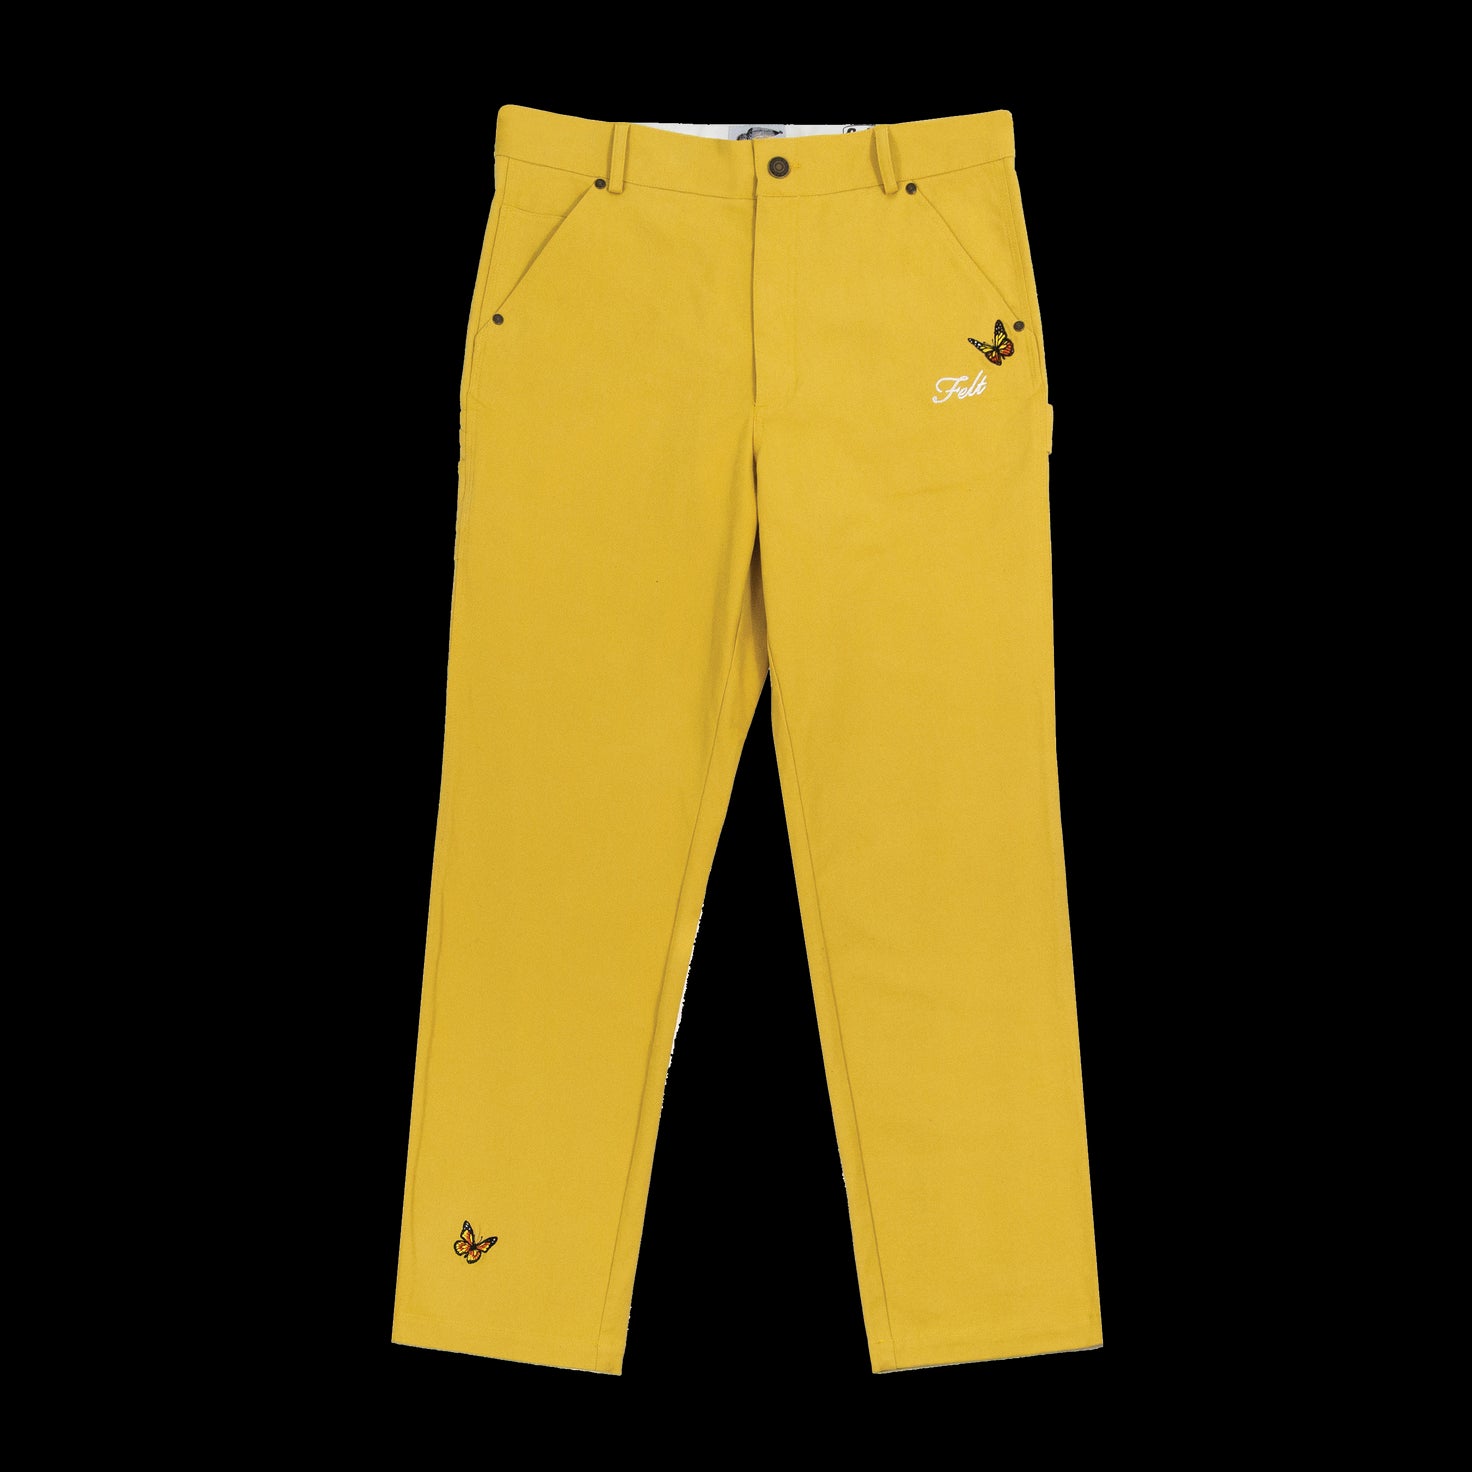 Butterfly Garden Pants Yellow